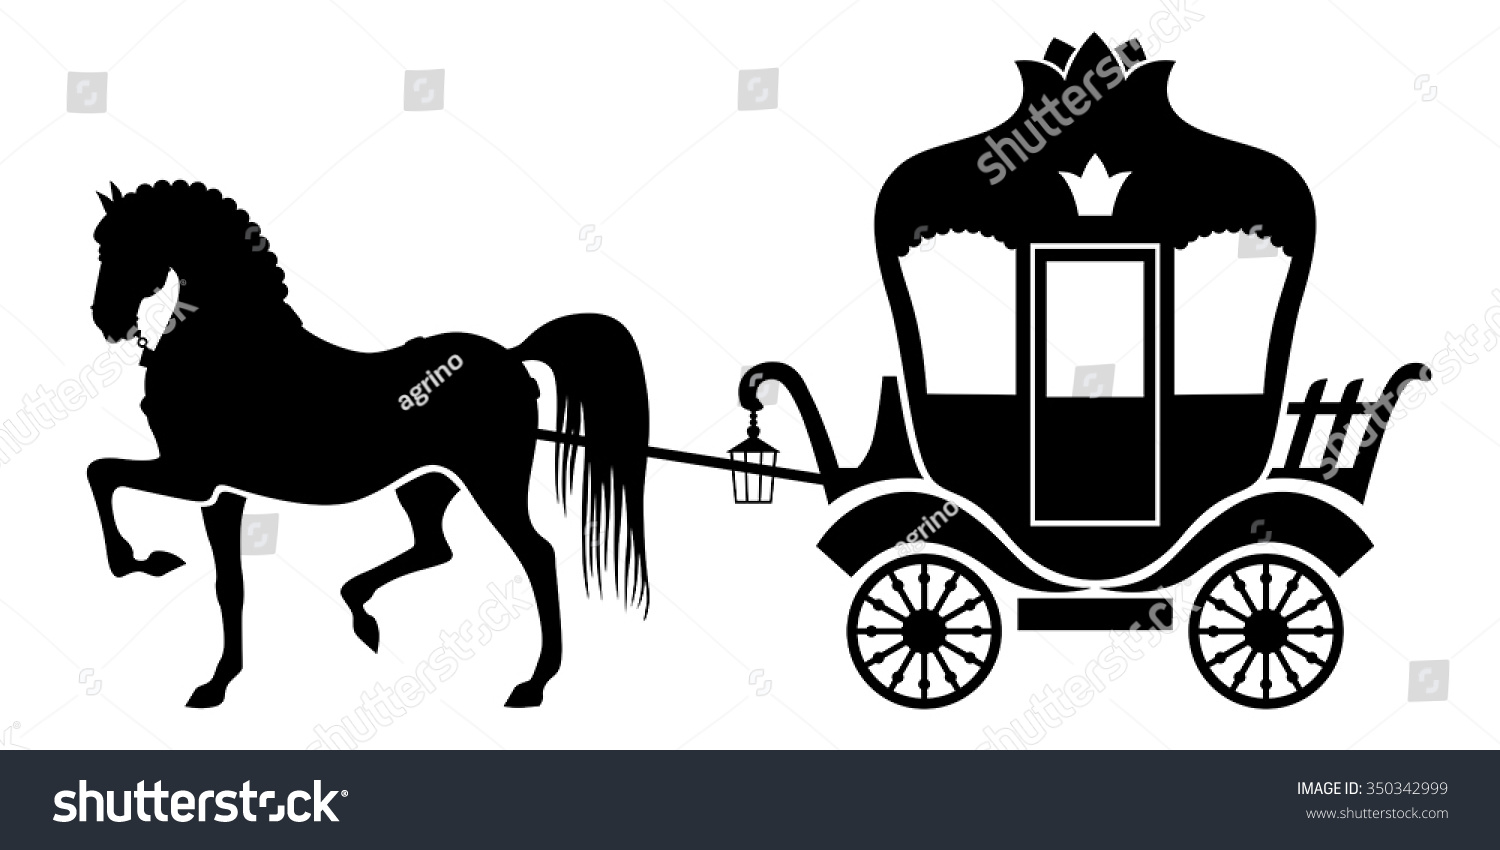 clipart horse drawn carriage - photo #39